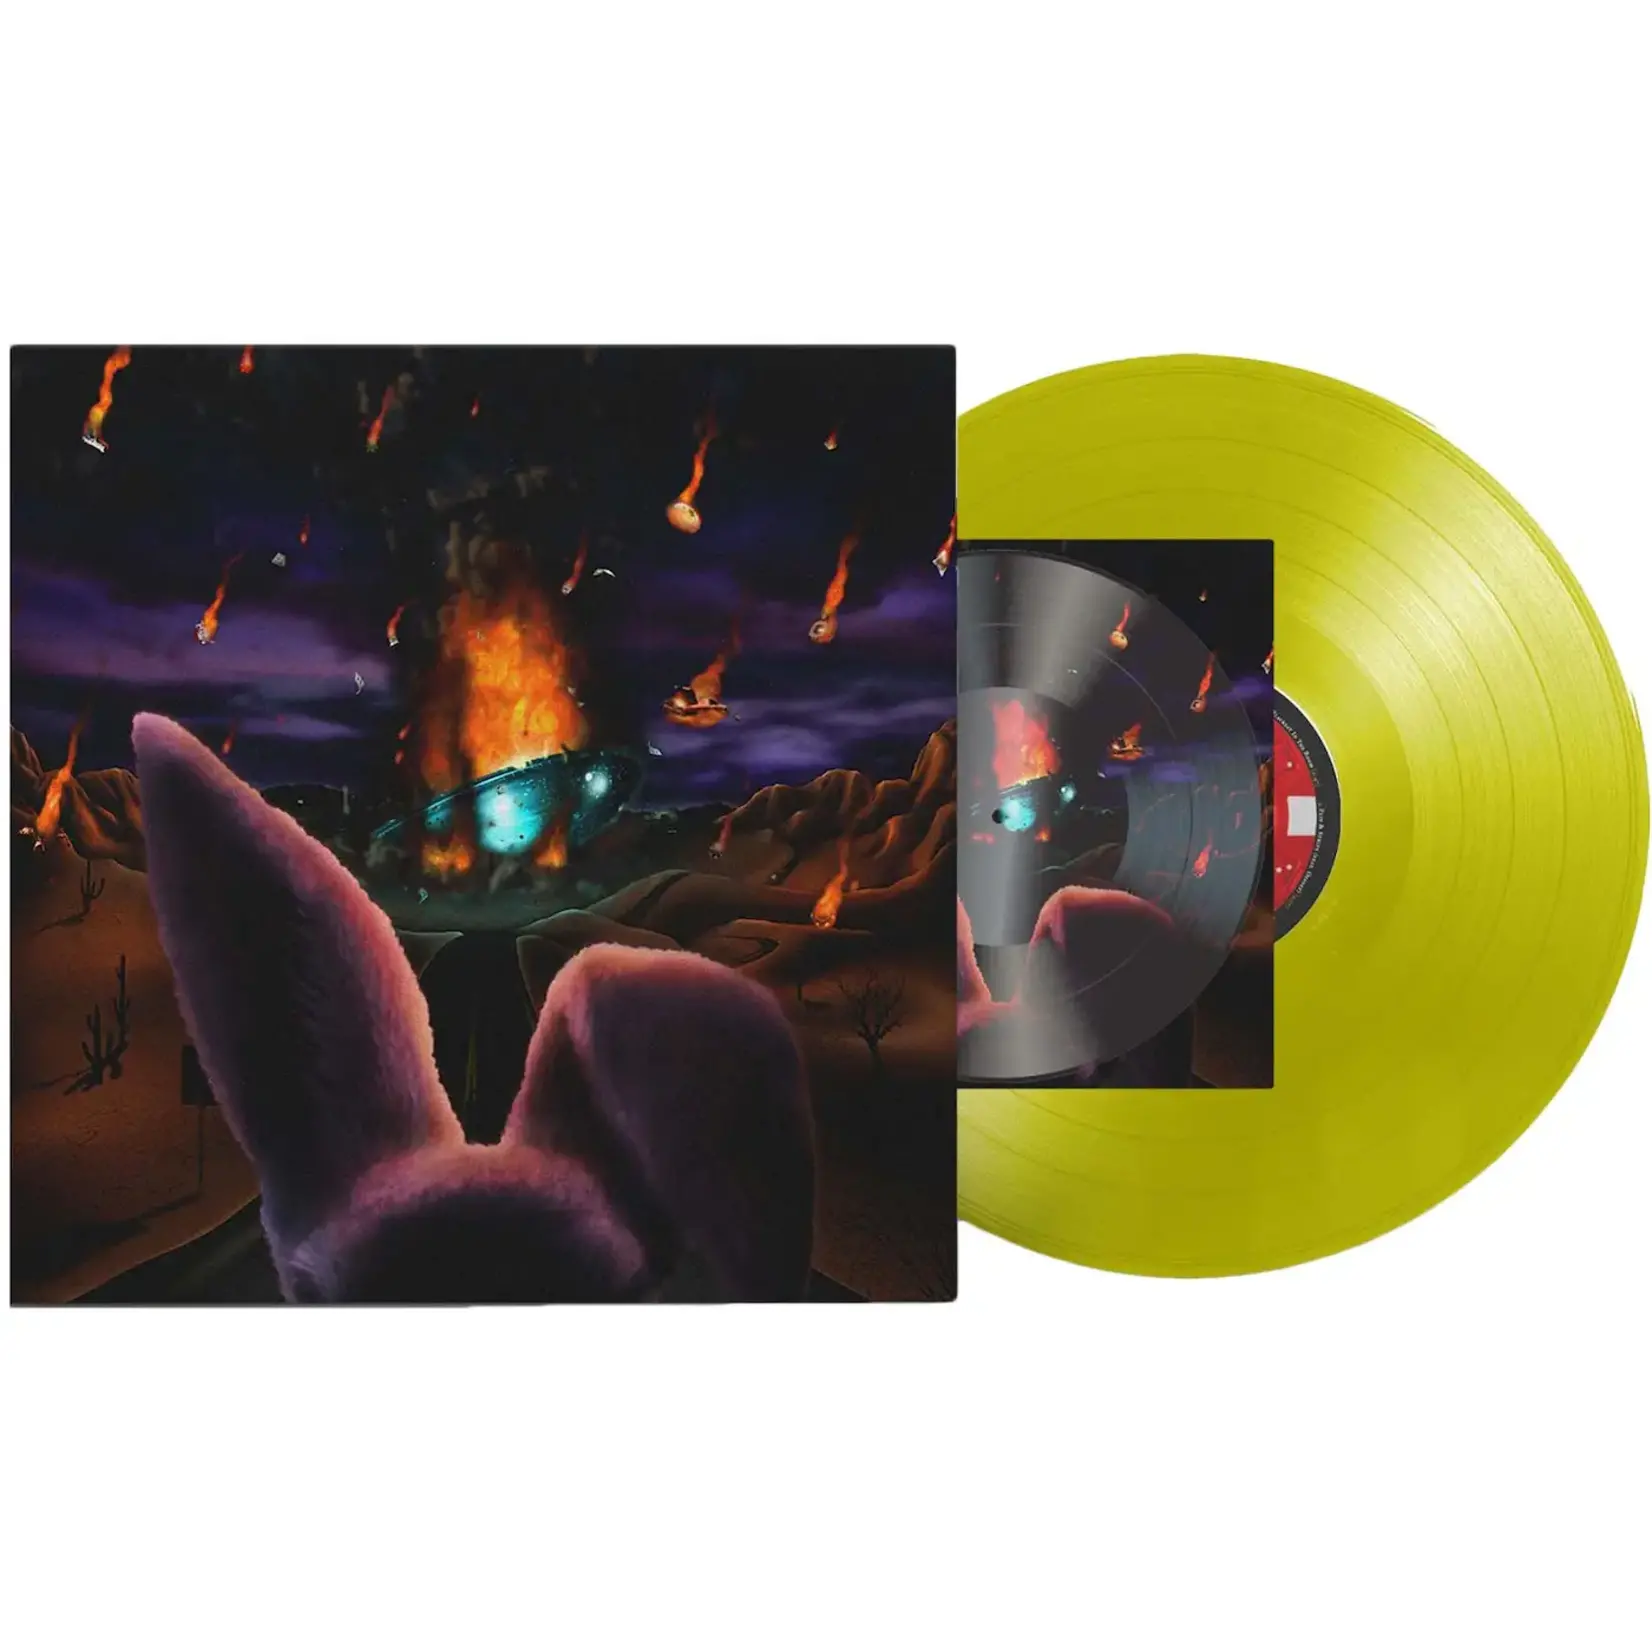 [New] Freddie Gibbs - $oul $old $eparately (2LP, yellow vinyl, indie exclusive)